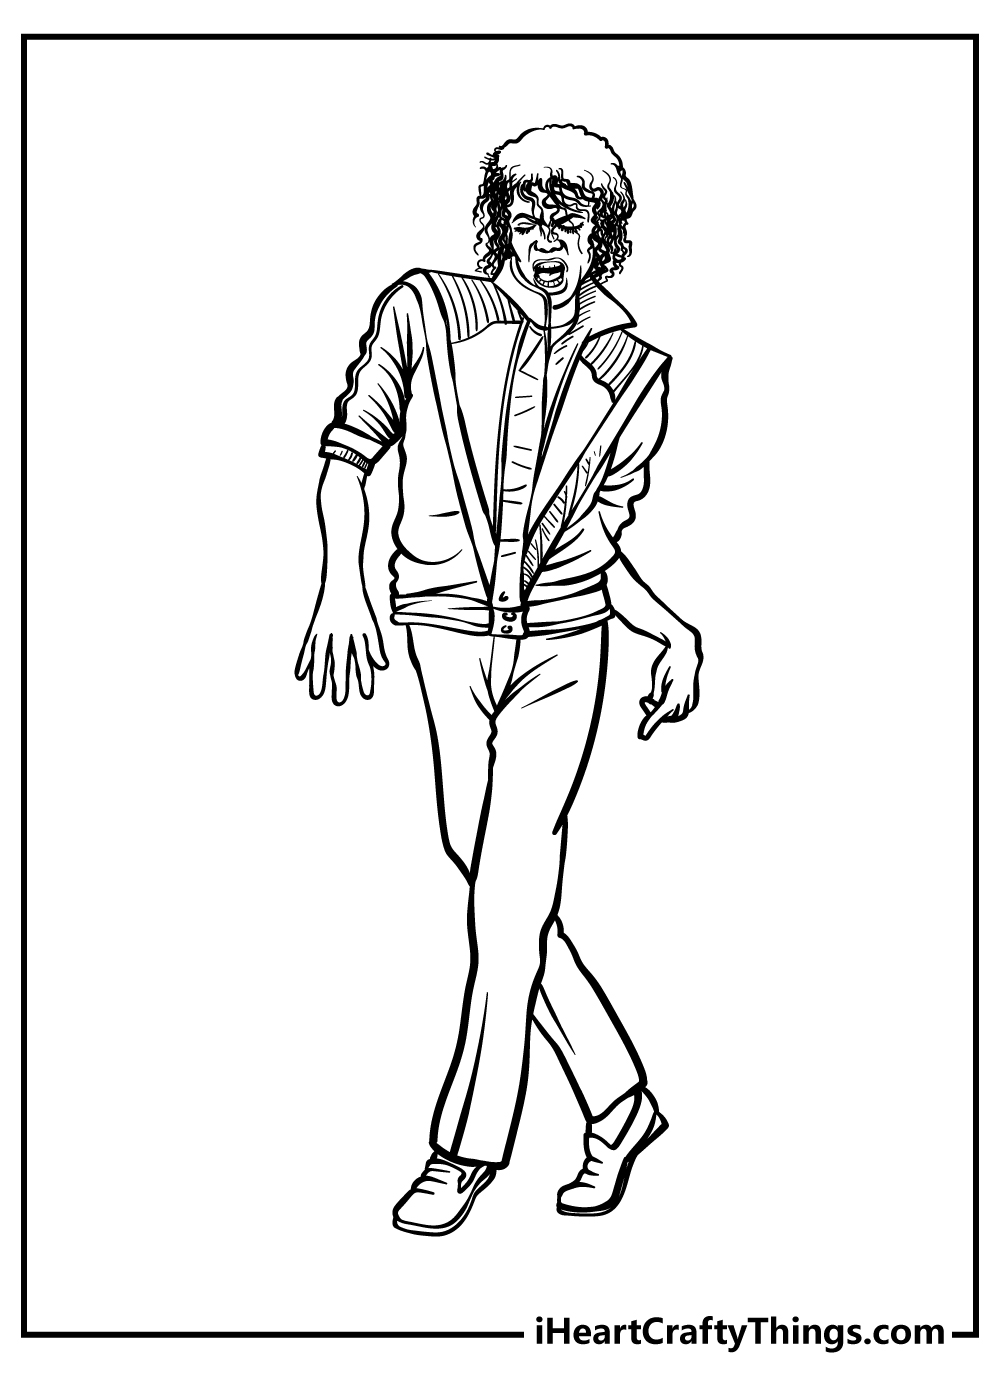 Michael Jackson Coloring Pages free pdf download